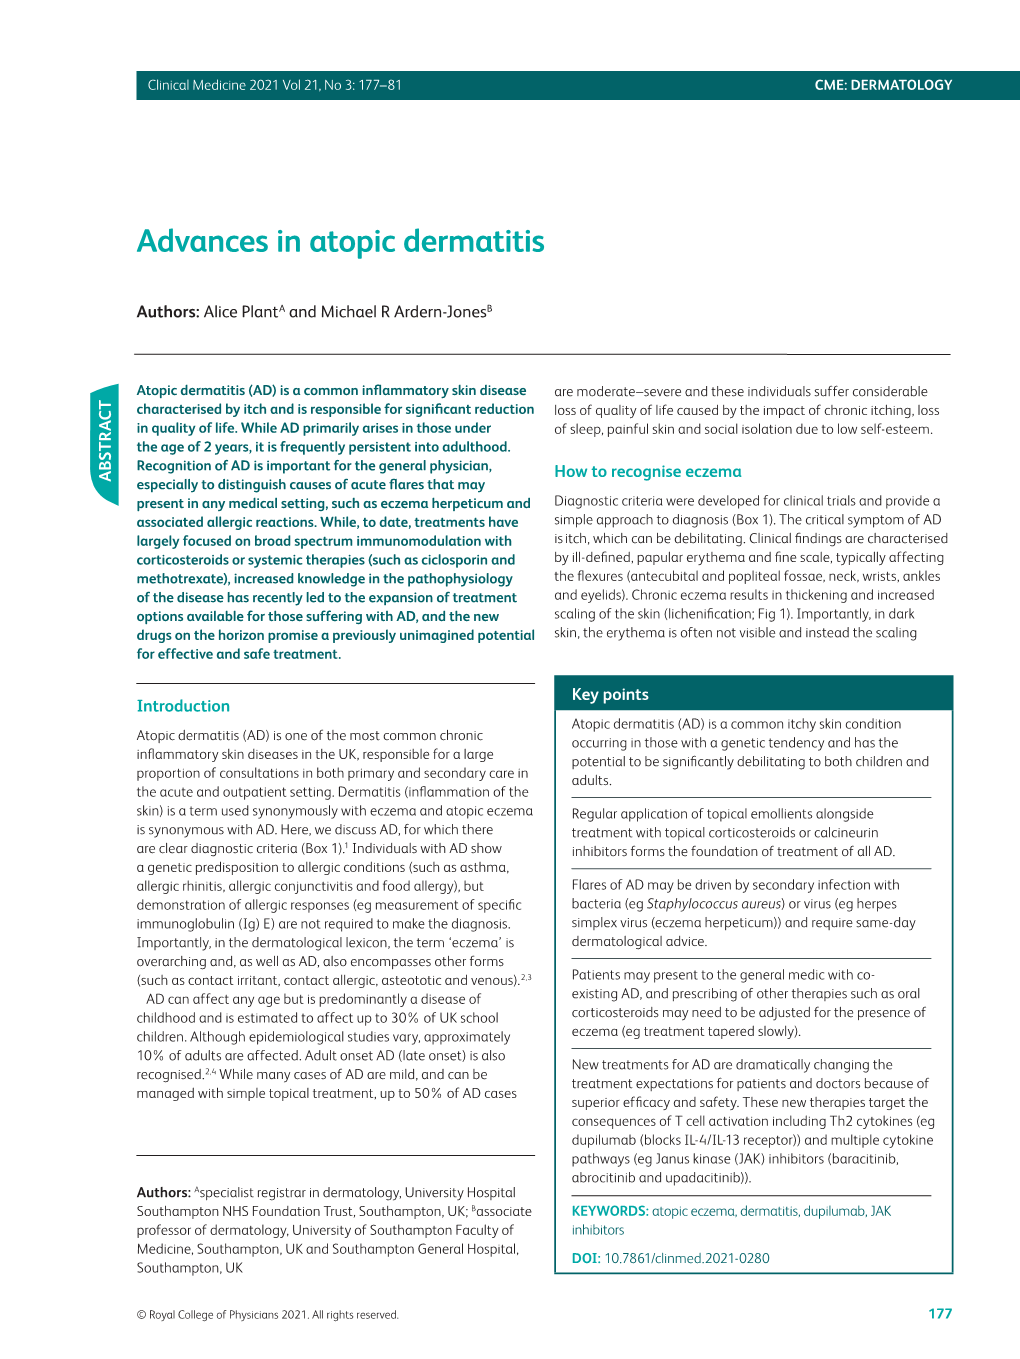 Advances in Atopic Dermatitis